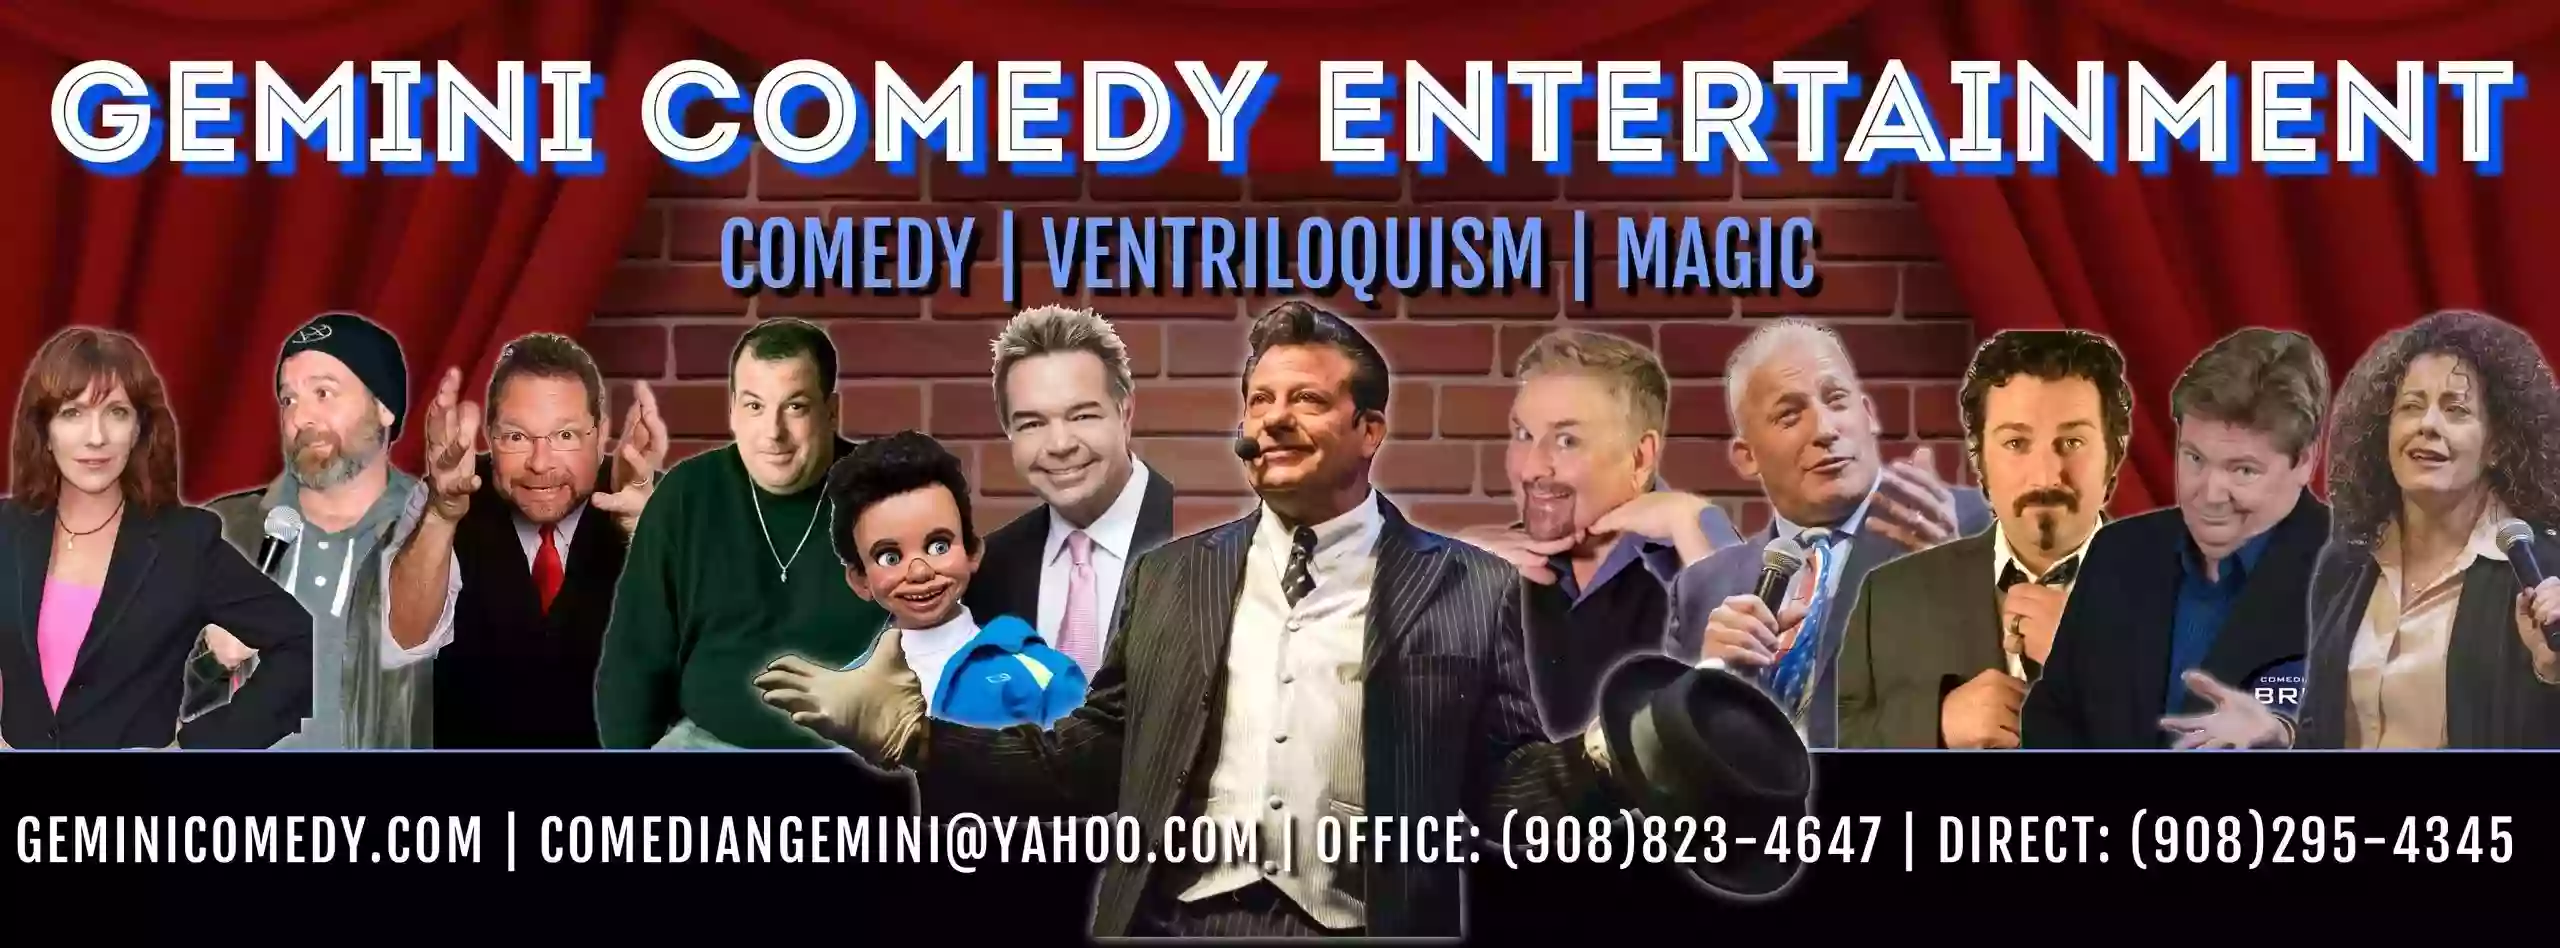 Gemini Comedy Entertainment